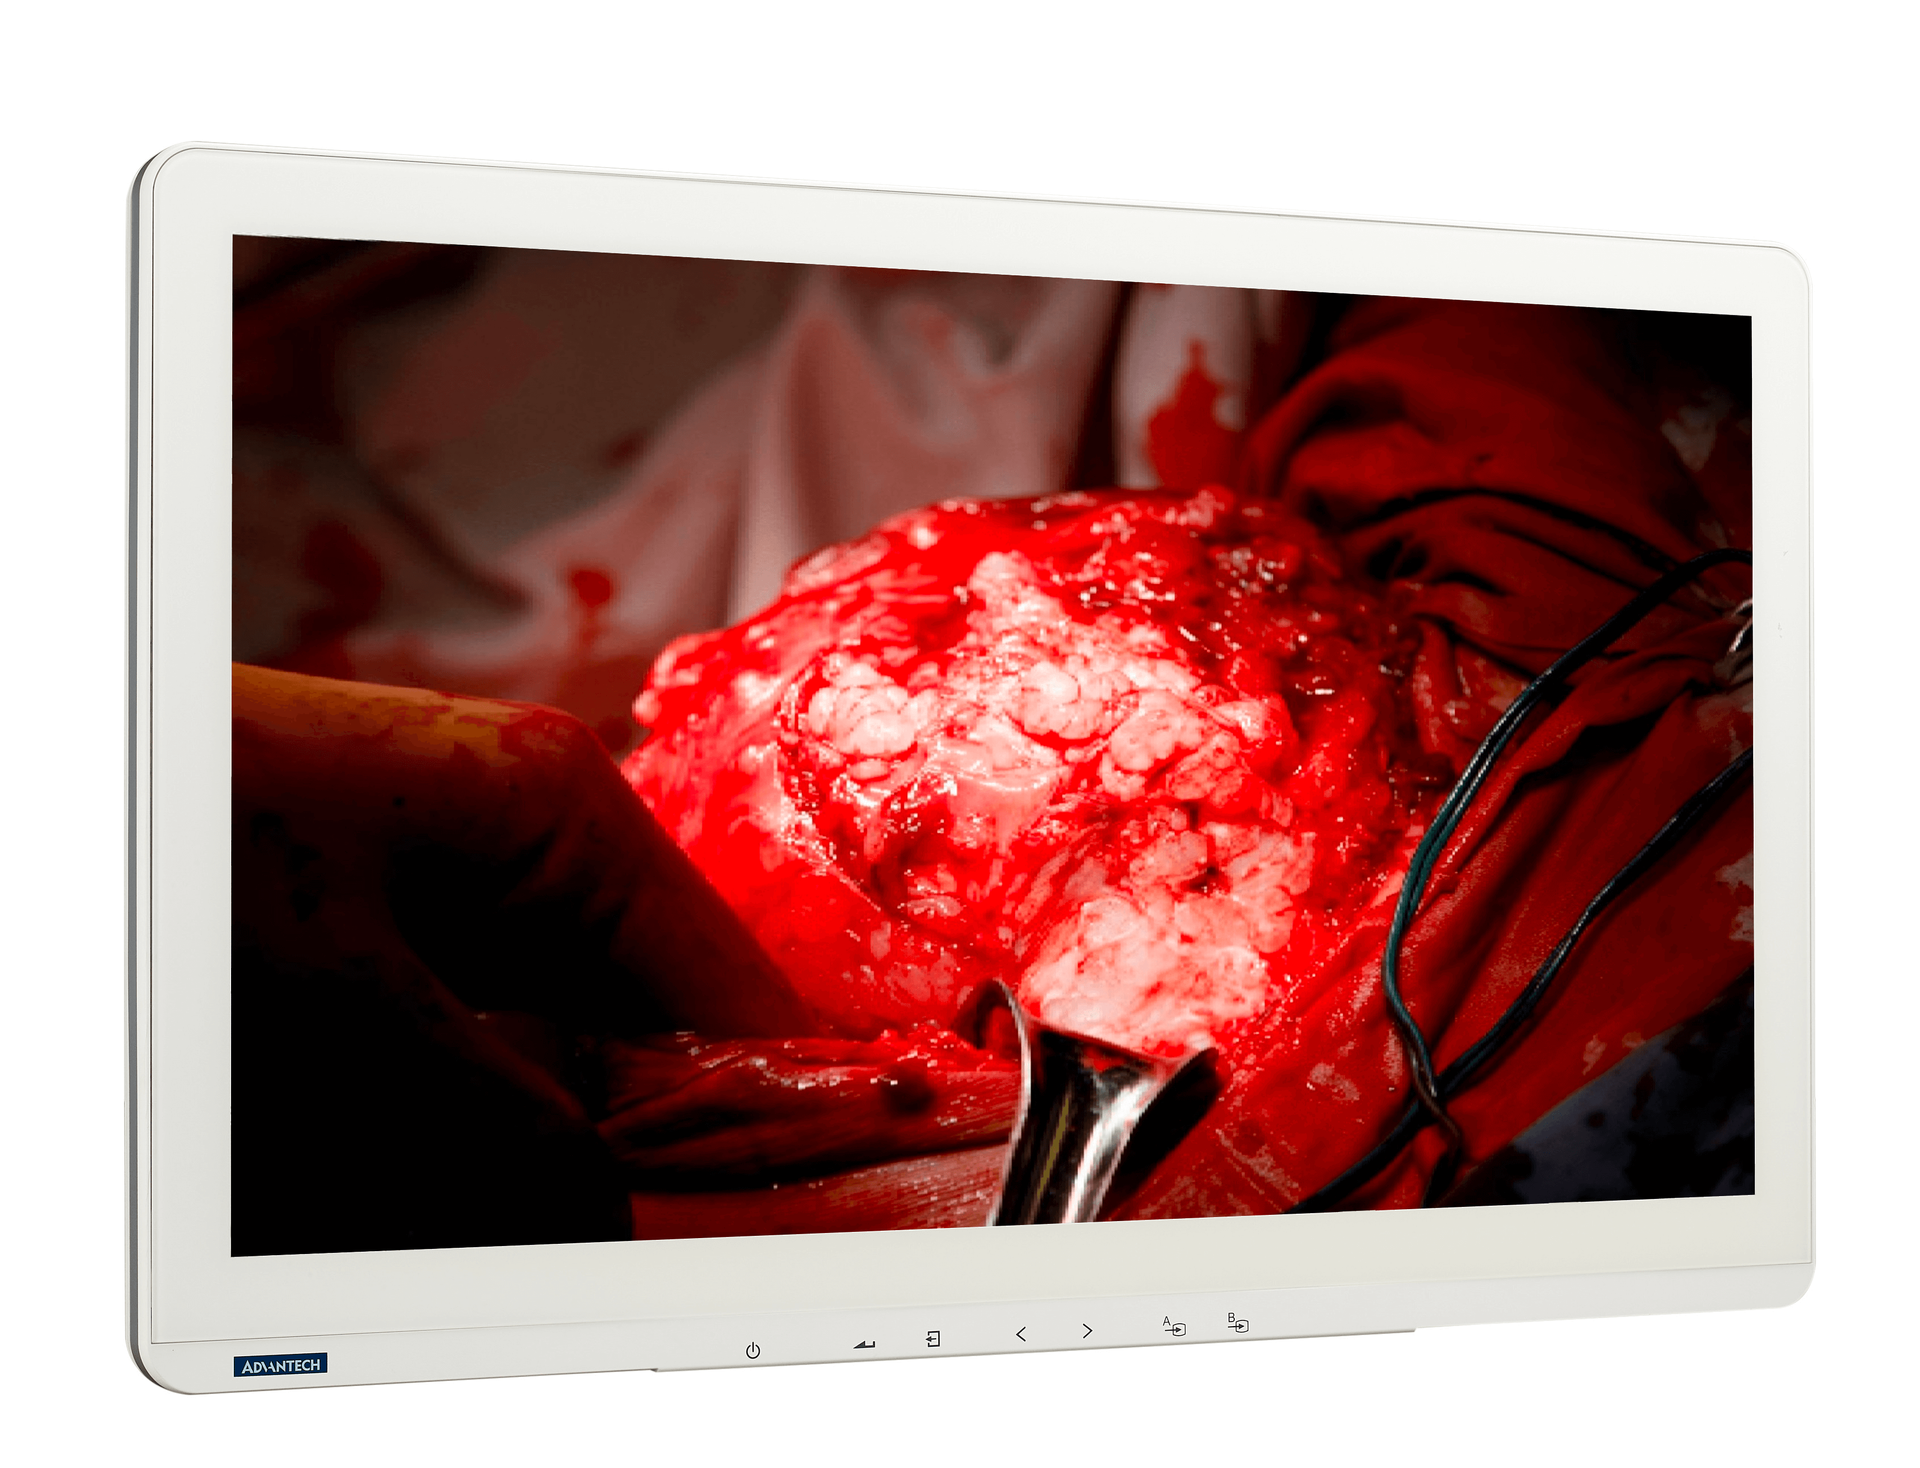 Advantech's PAX-332 surgical monitor